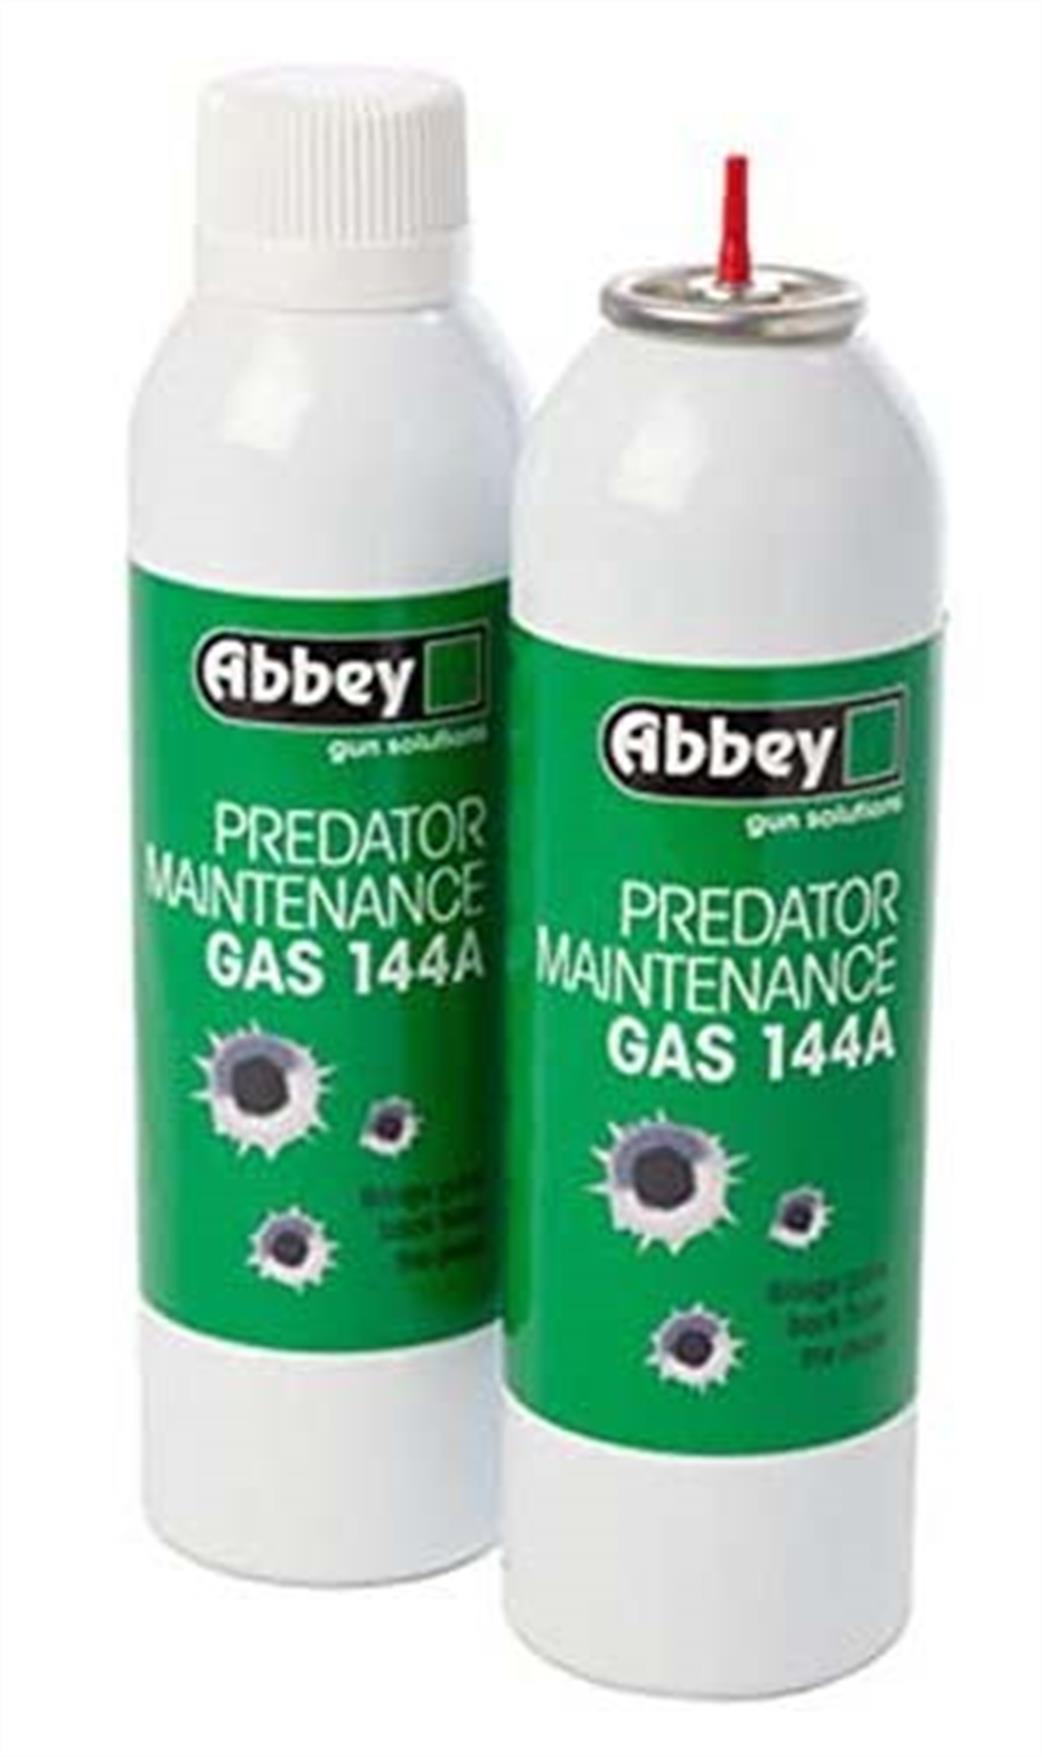 Abbey 610108 Predator Maintenance Gas 144a  270ml